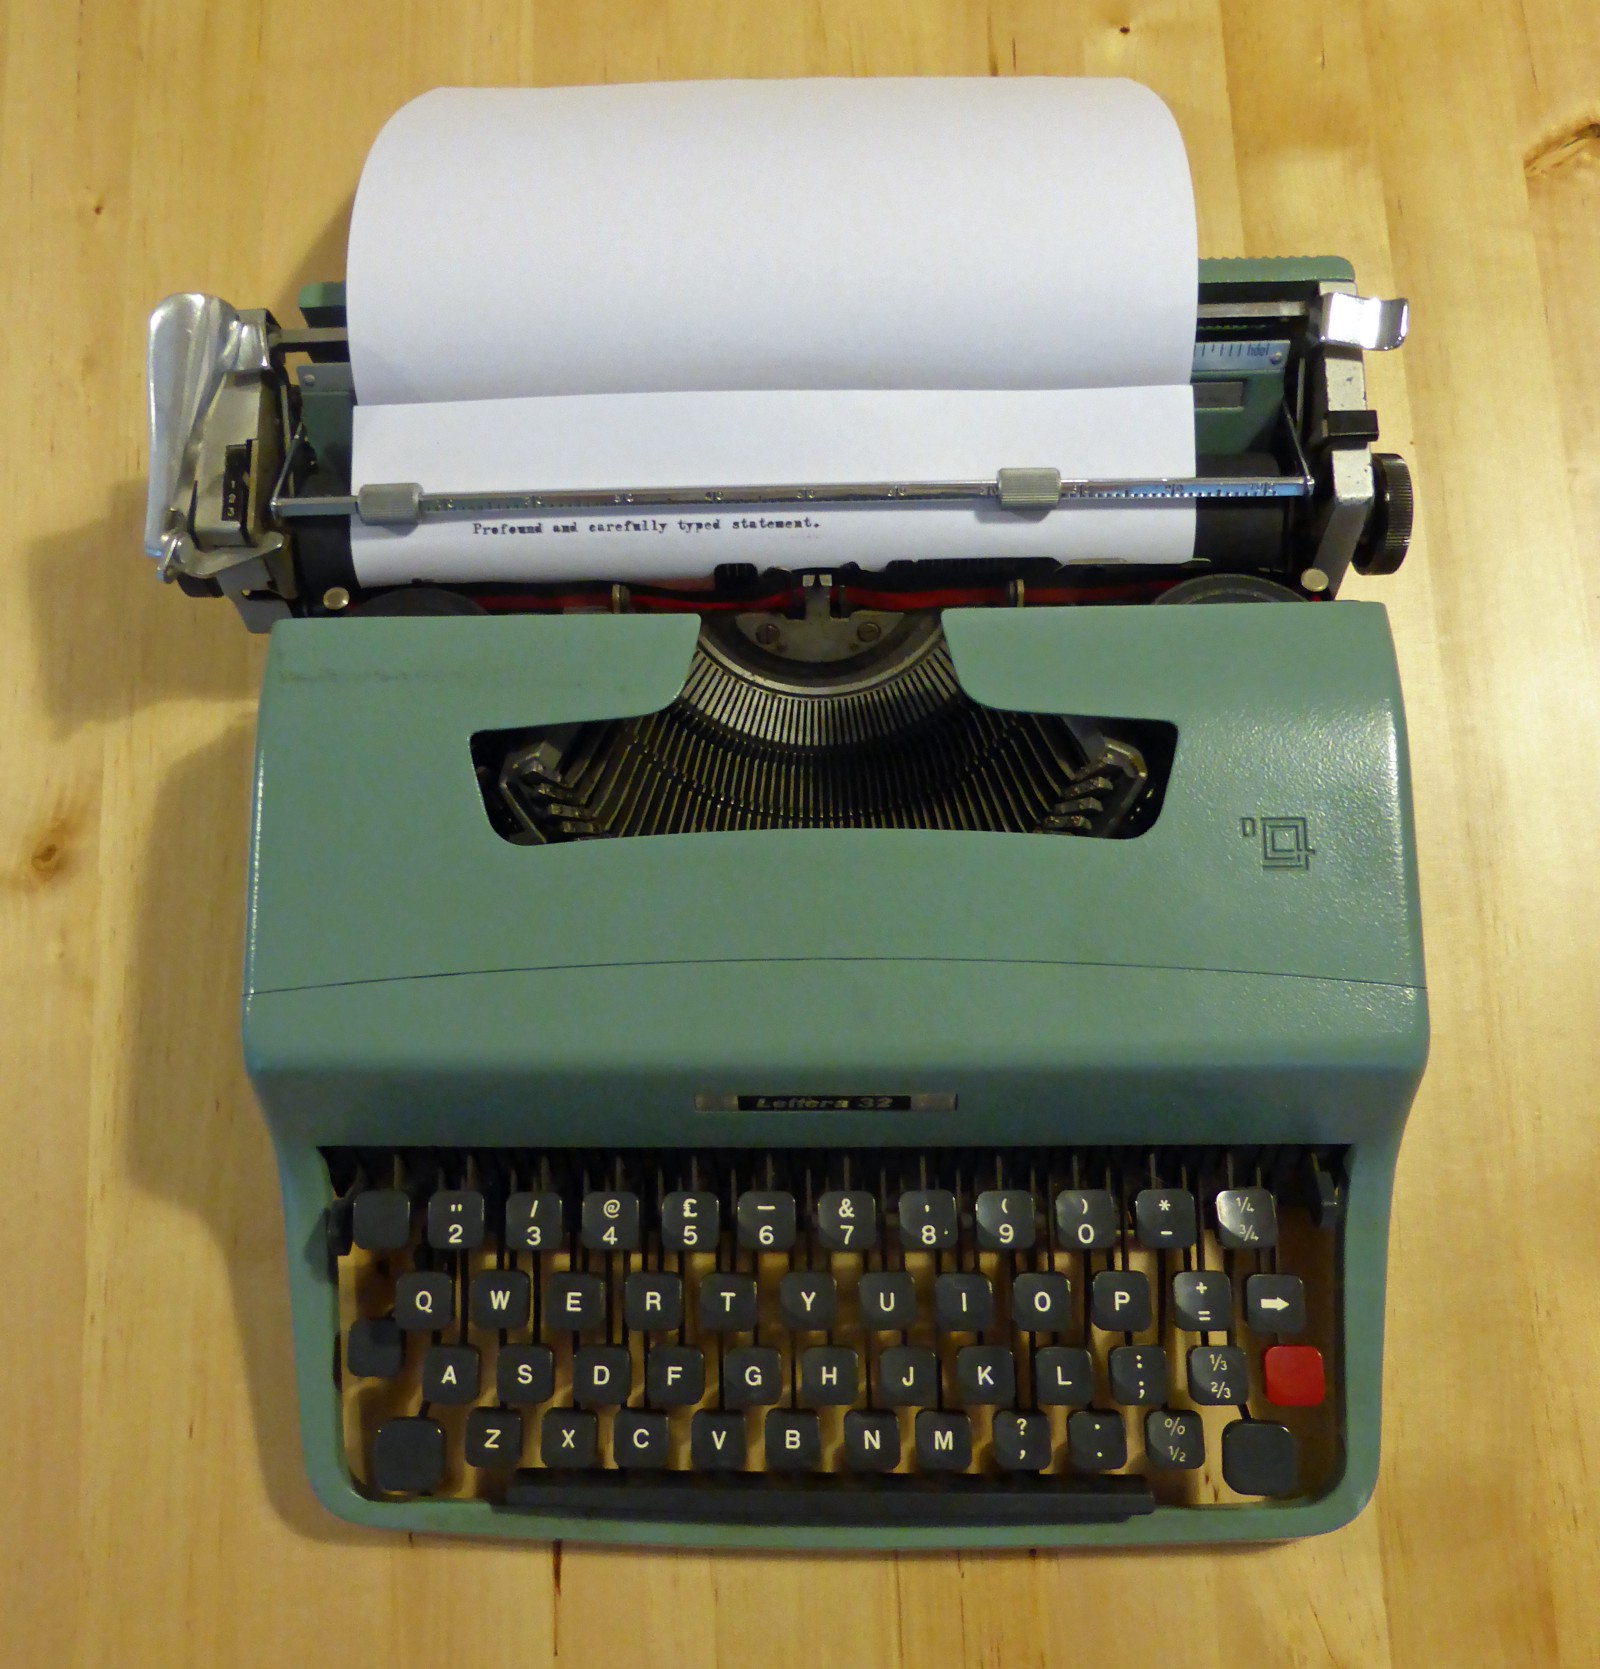 2: The Typewriter – Objects – Medium